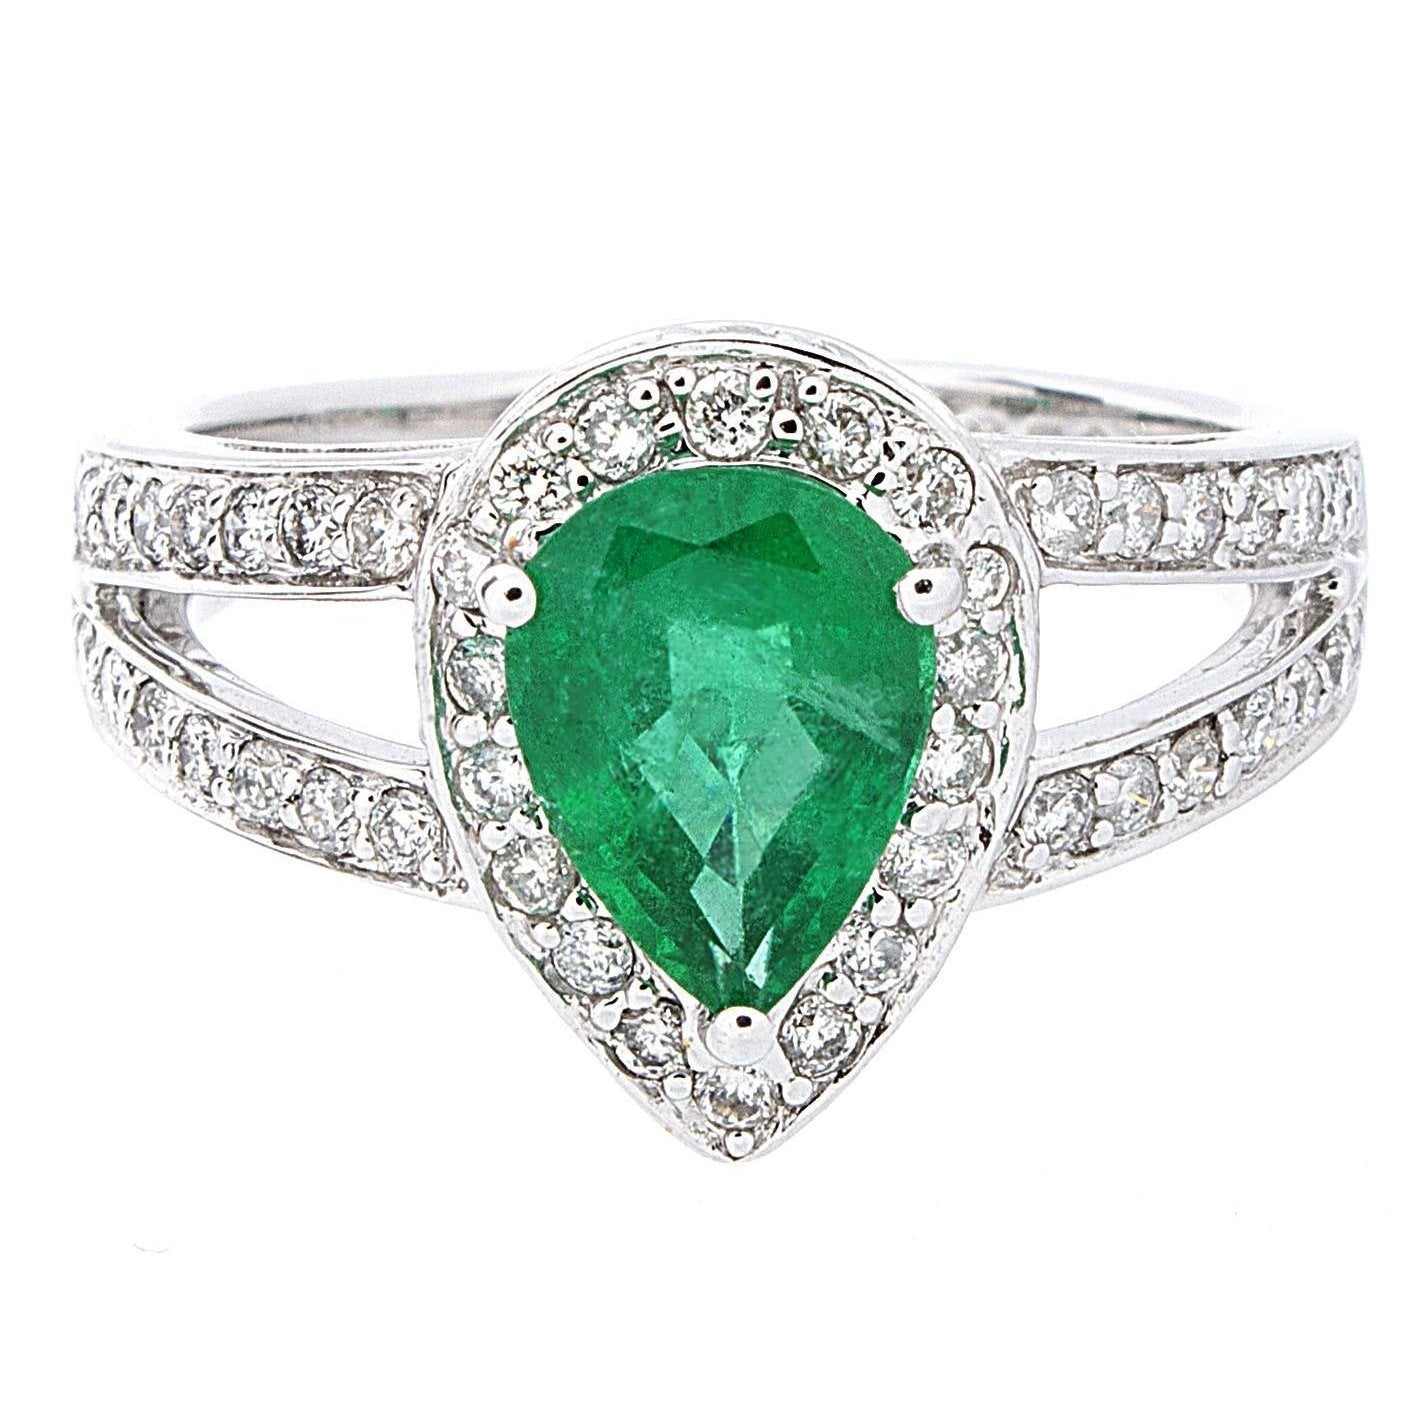 Bague de mariage 6 carats poire vert émeraude avec diamants or blanc 14K - HarryChadEnt.FR